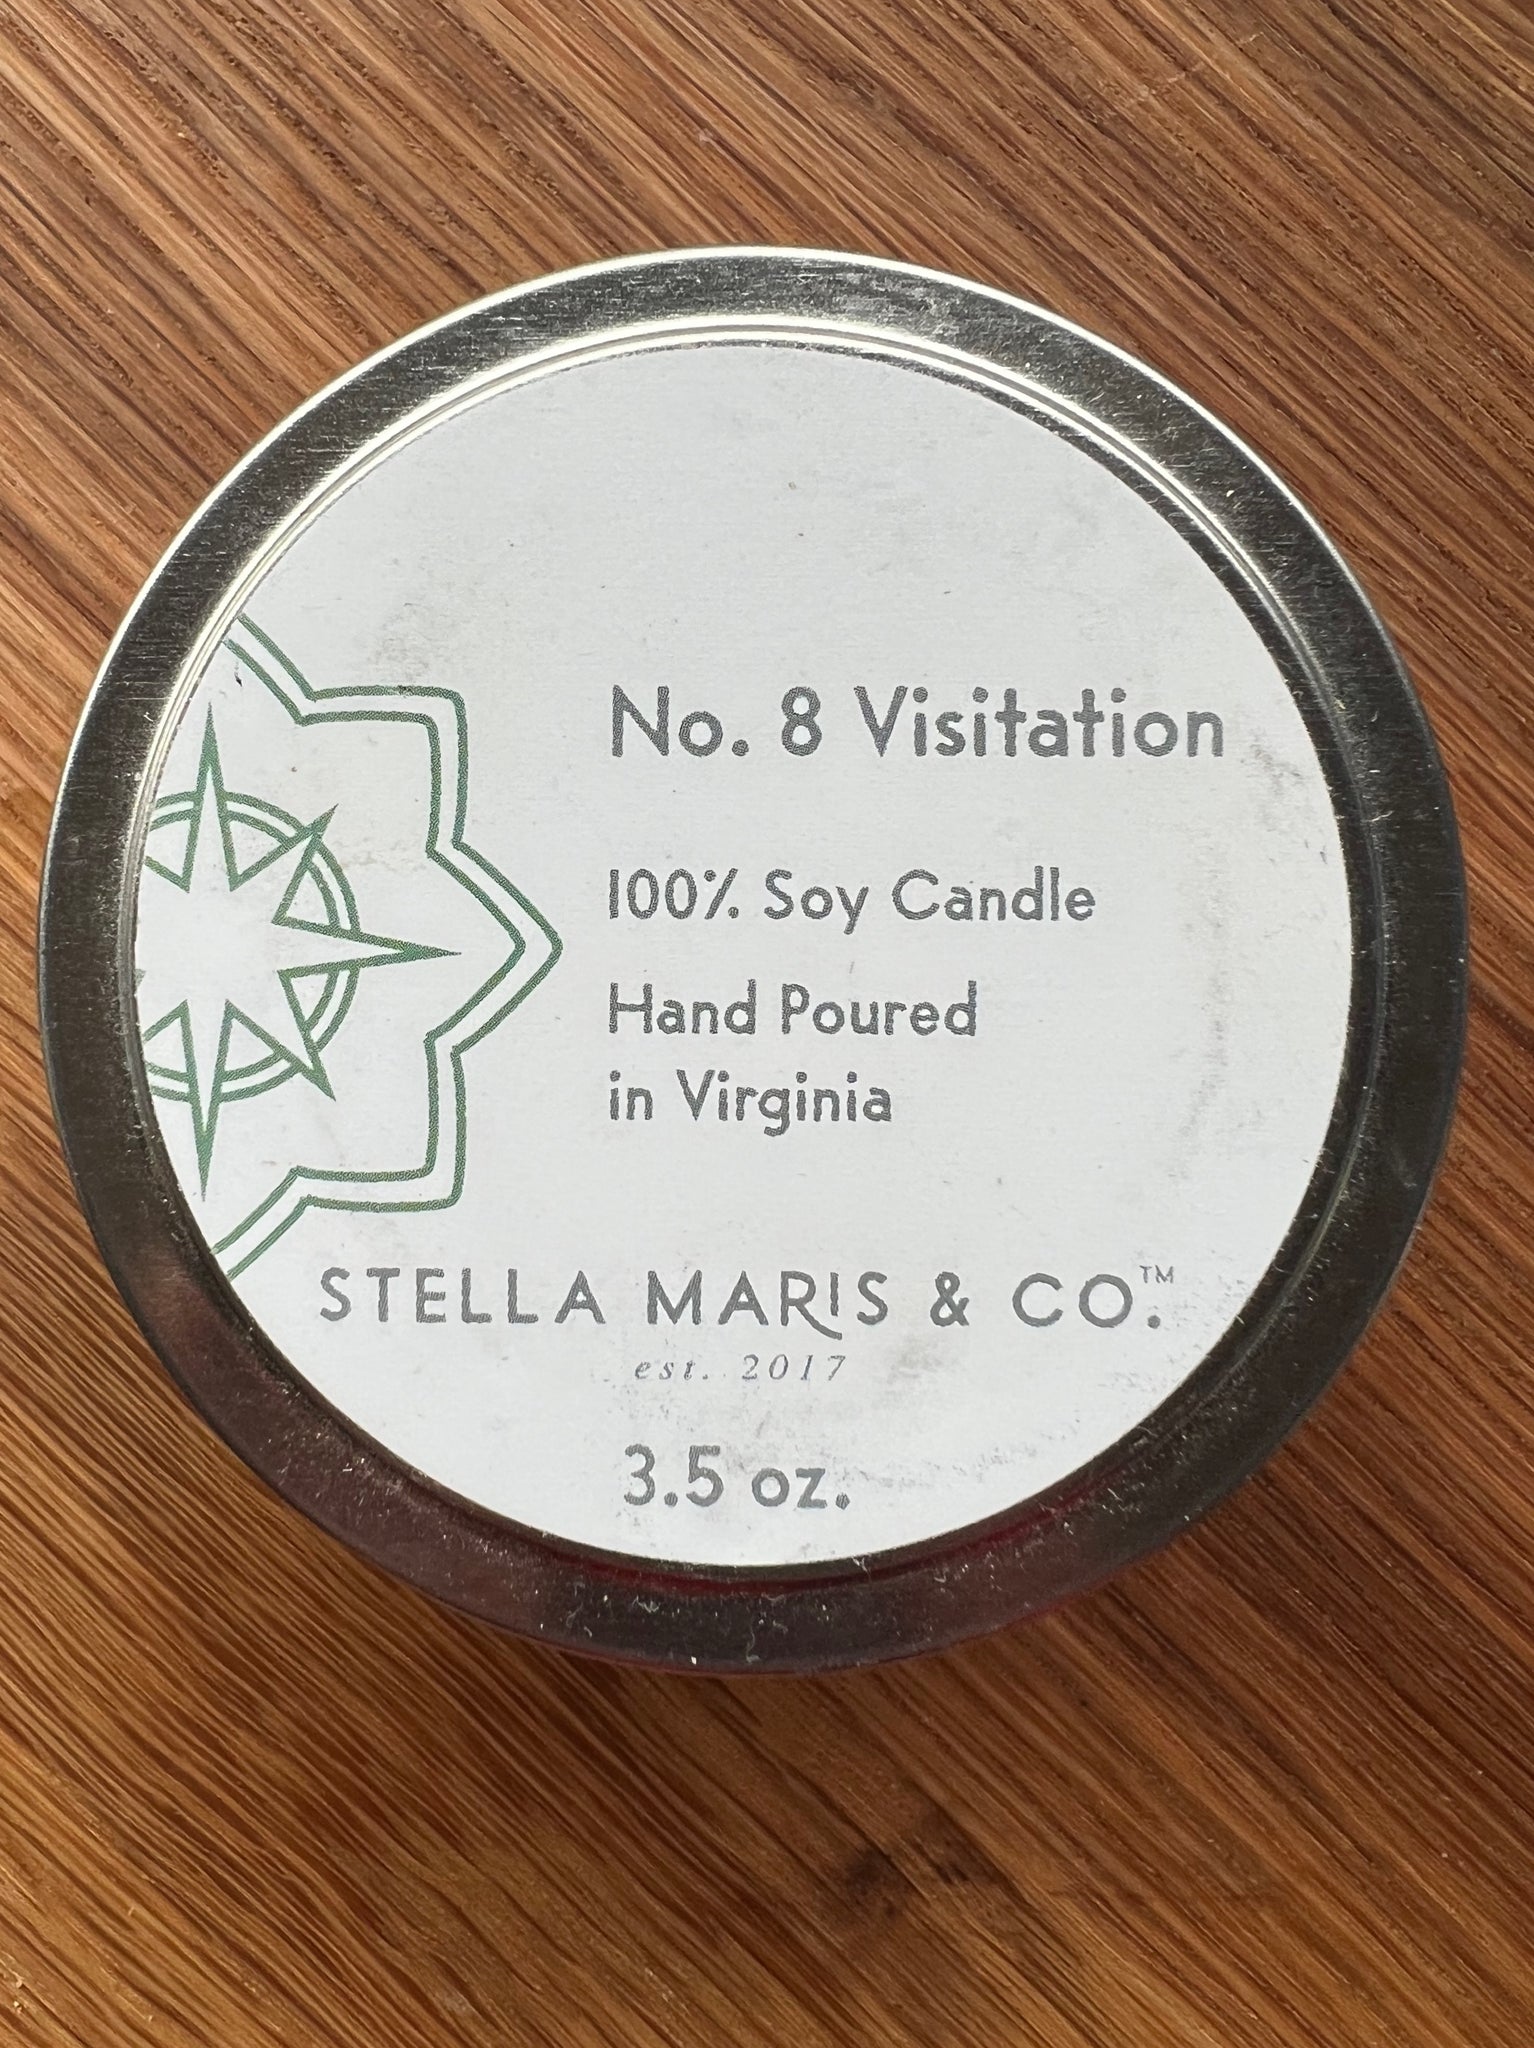 Stella Maris & Co. Travel Candles